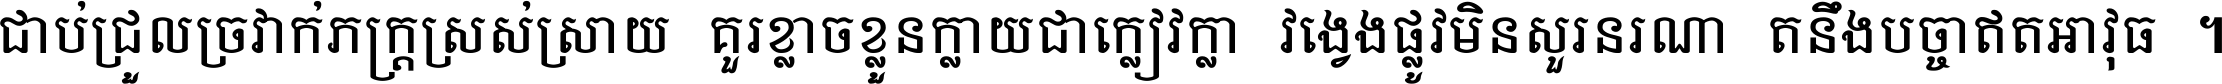 Khmer Mondulkiri A Medium